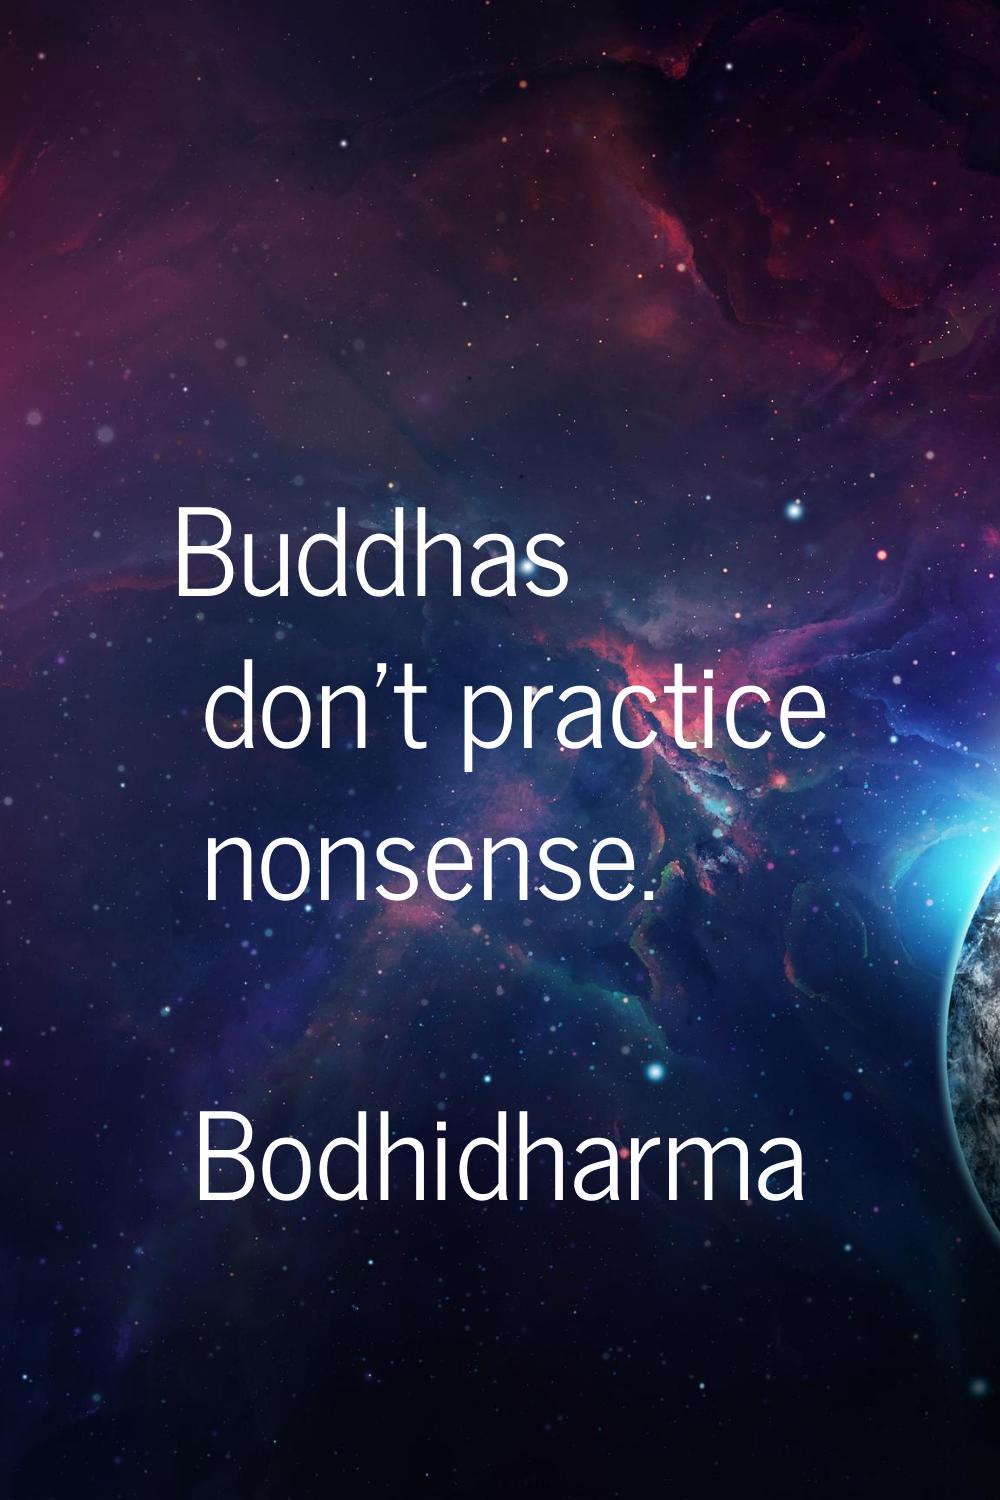 Buddhas don't practice nonsense.